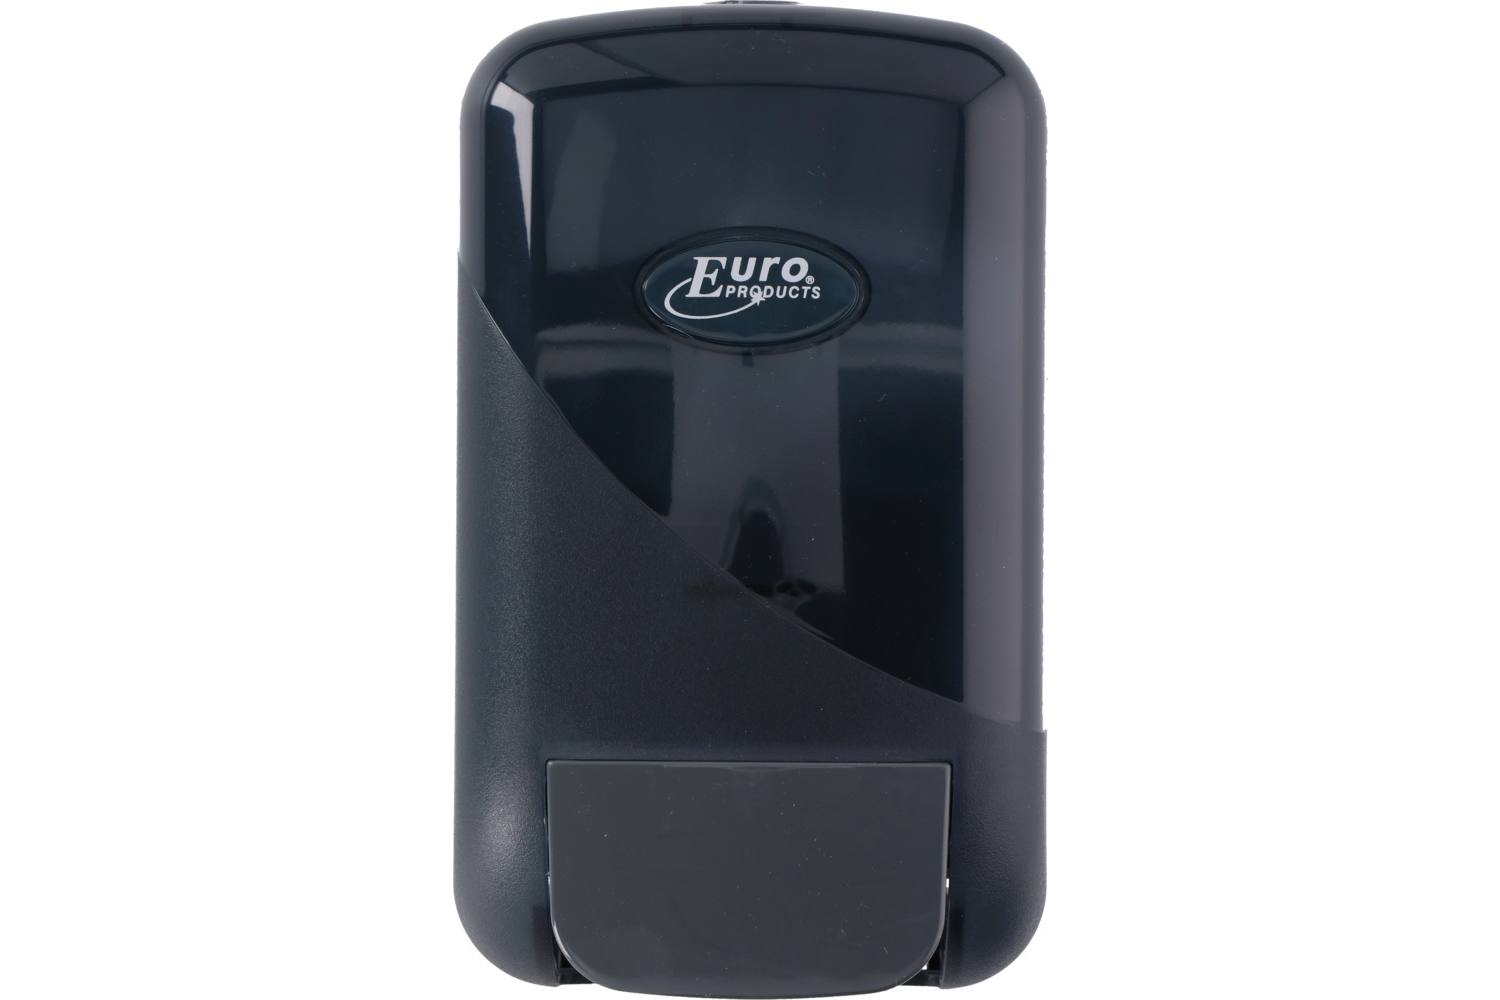 Dispenser, Euro, toilet seat cleaner, 400ml 2